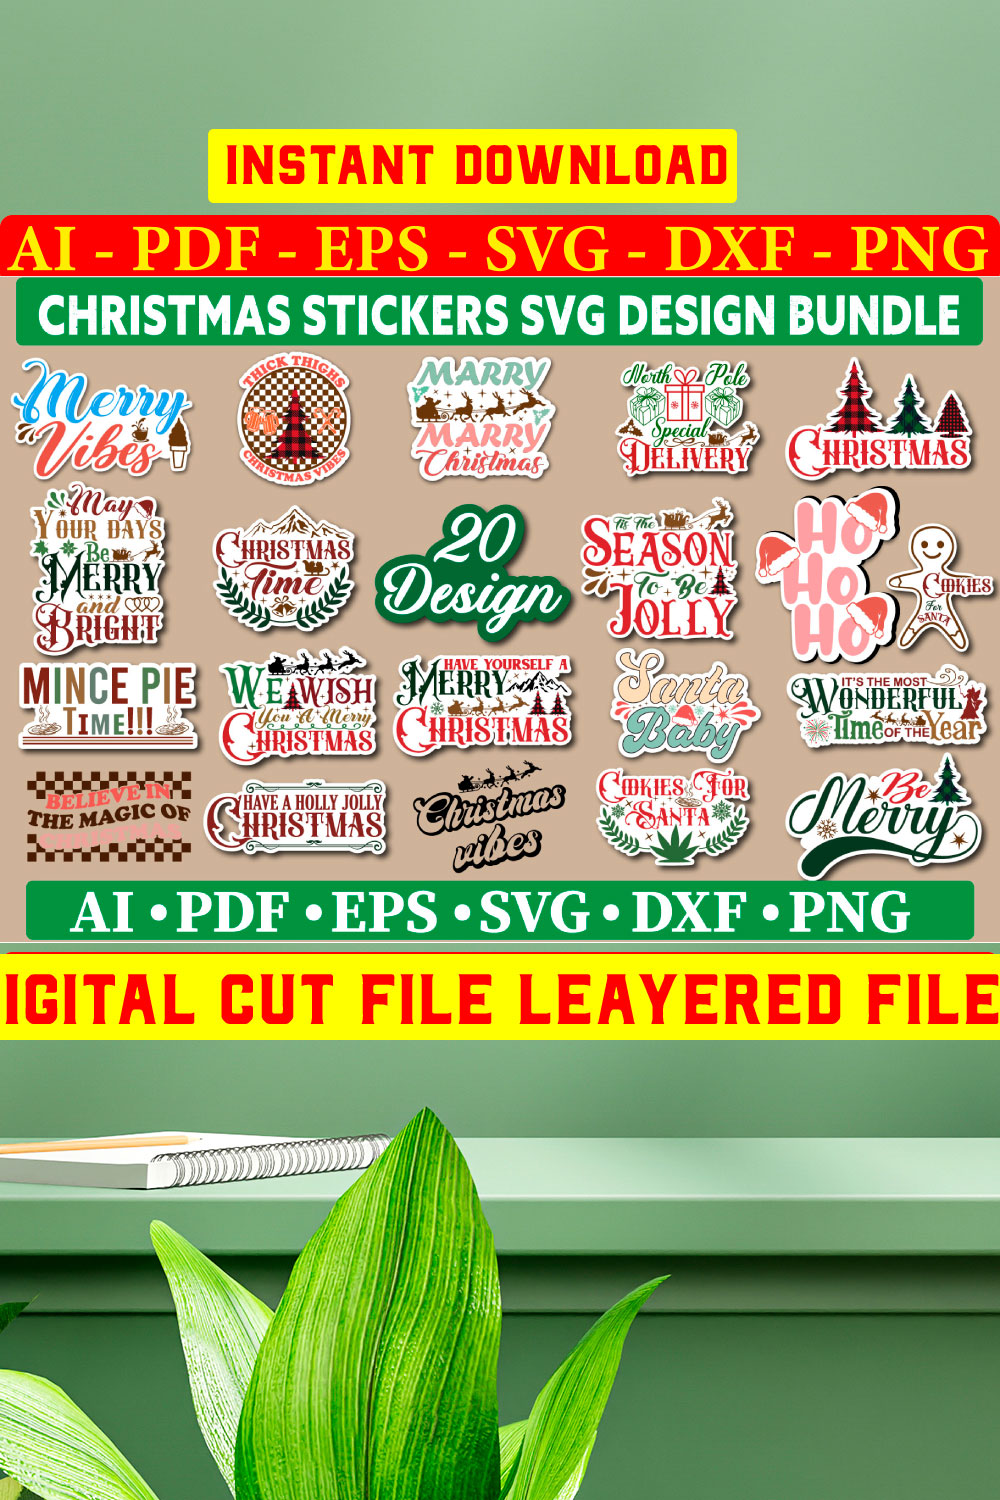 Christmas Sticker Svg Design Bundle pinterest preview image.